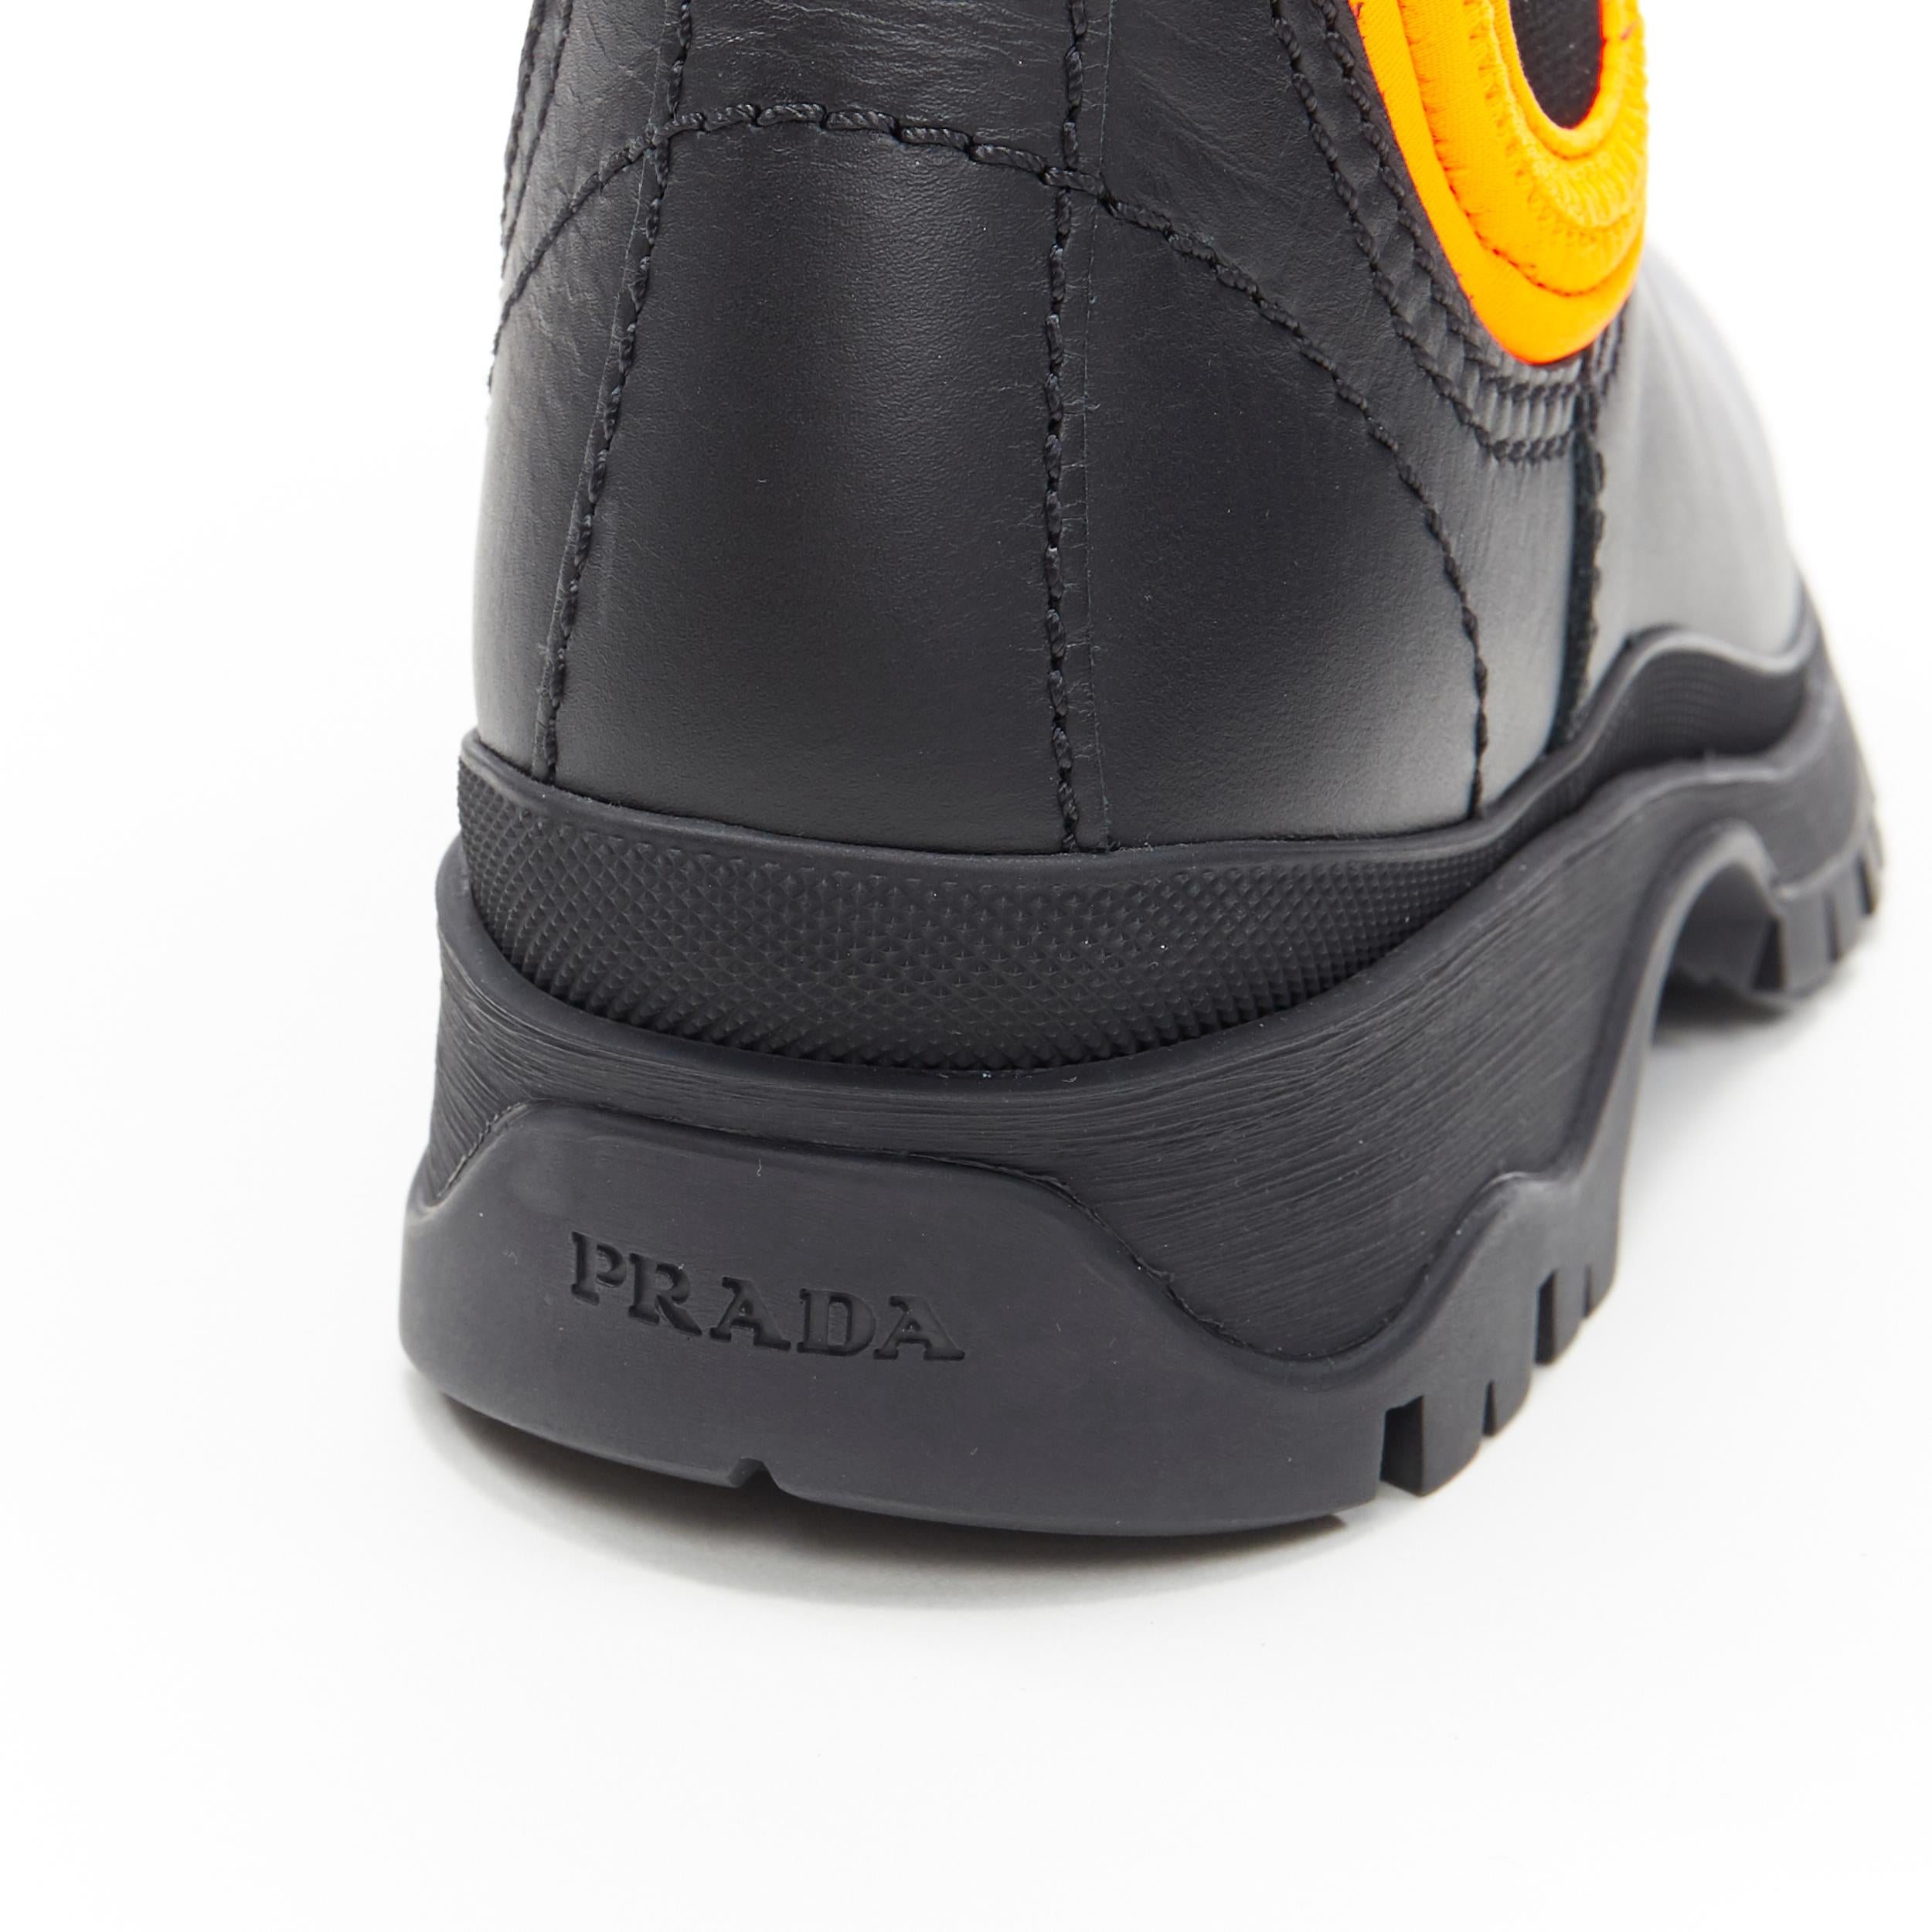 Women's new PRADA 2018 Runway neon orange neoprene black leather ankle rugged boot EU36